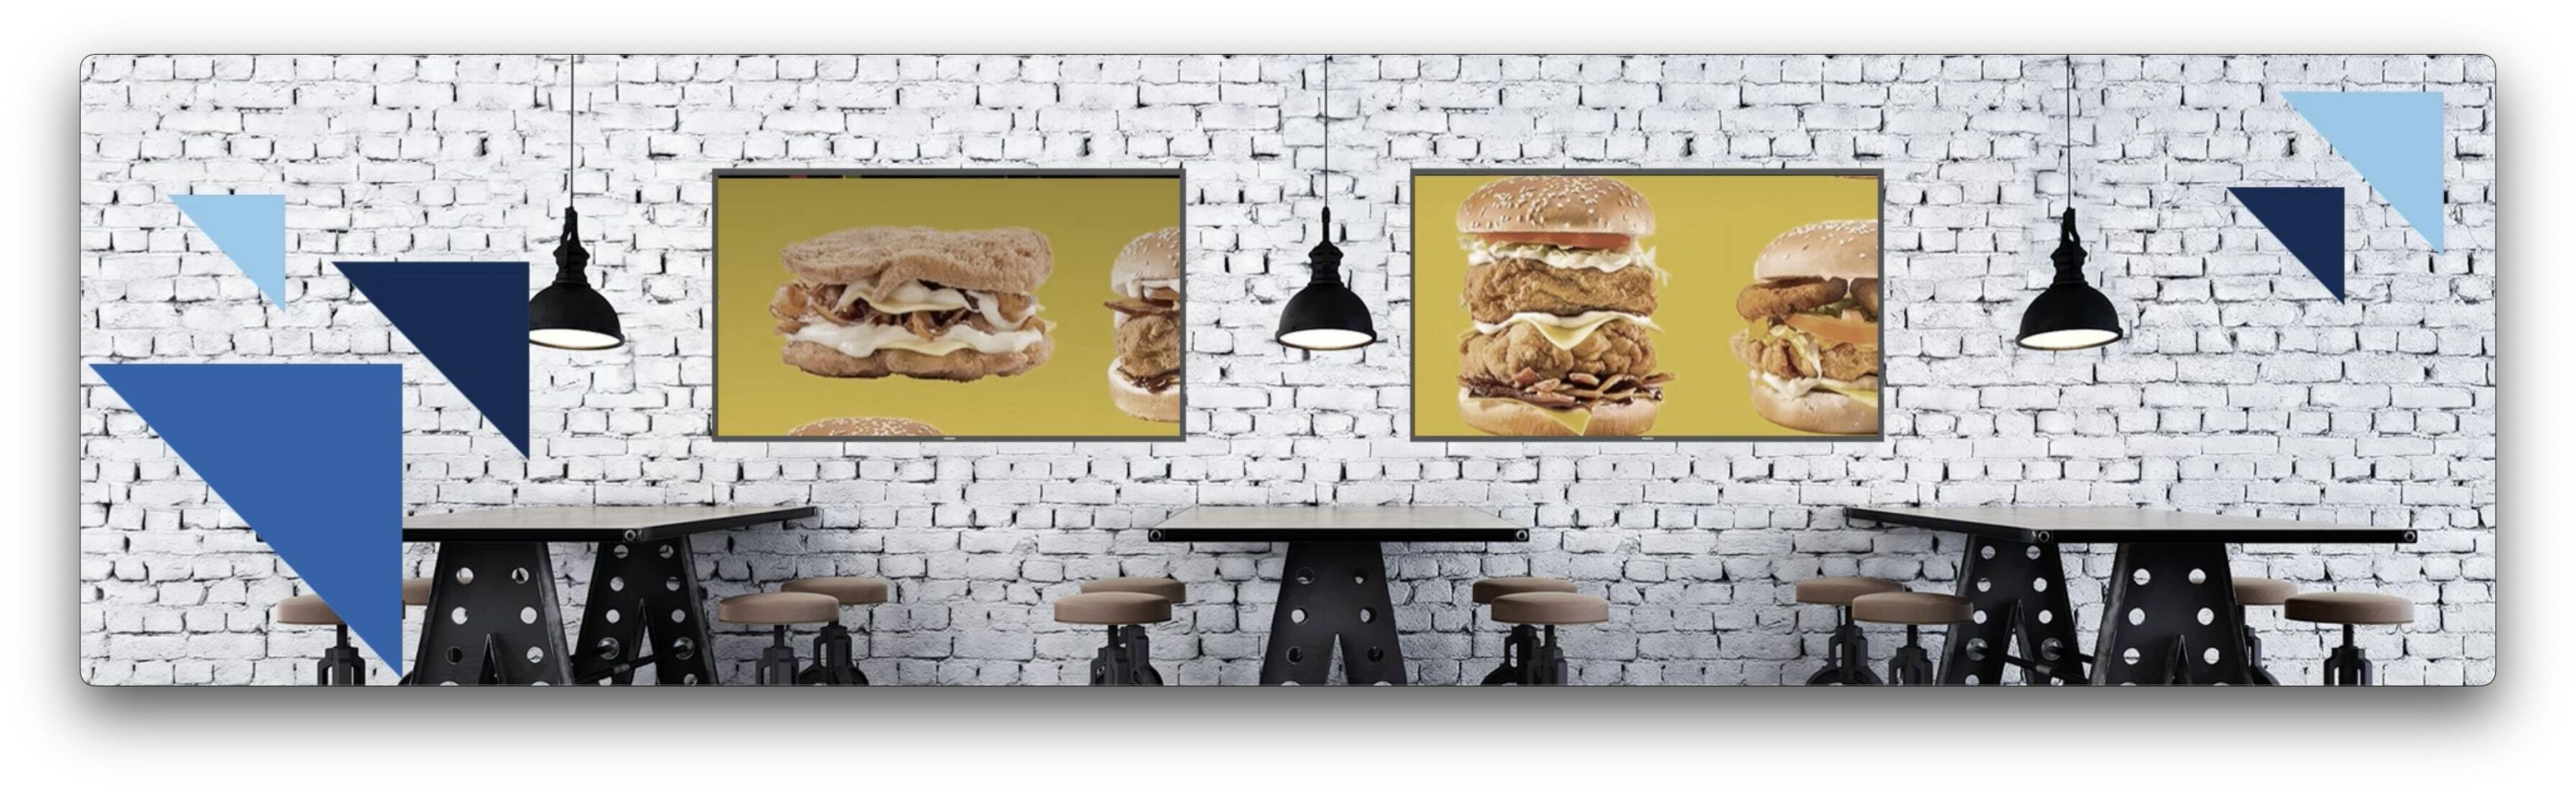 Flyeralarm-Digital-Signage-Gastronomie-Restaurant-Header